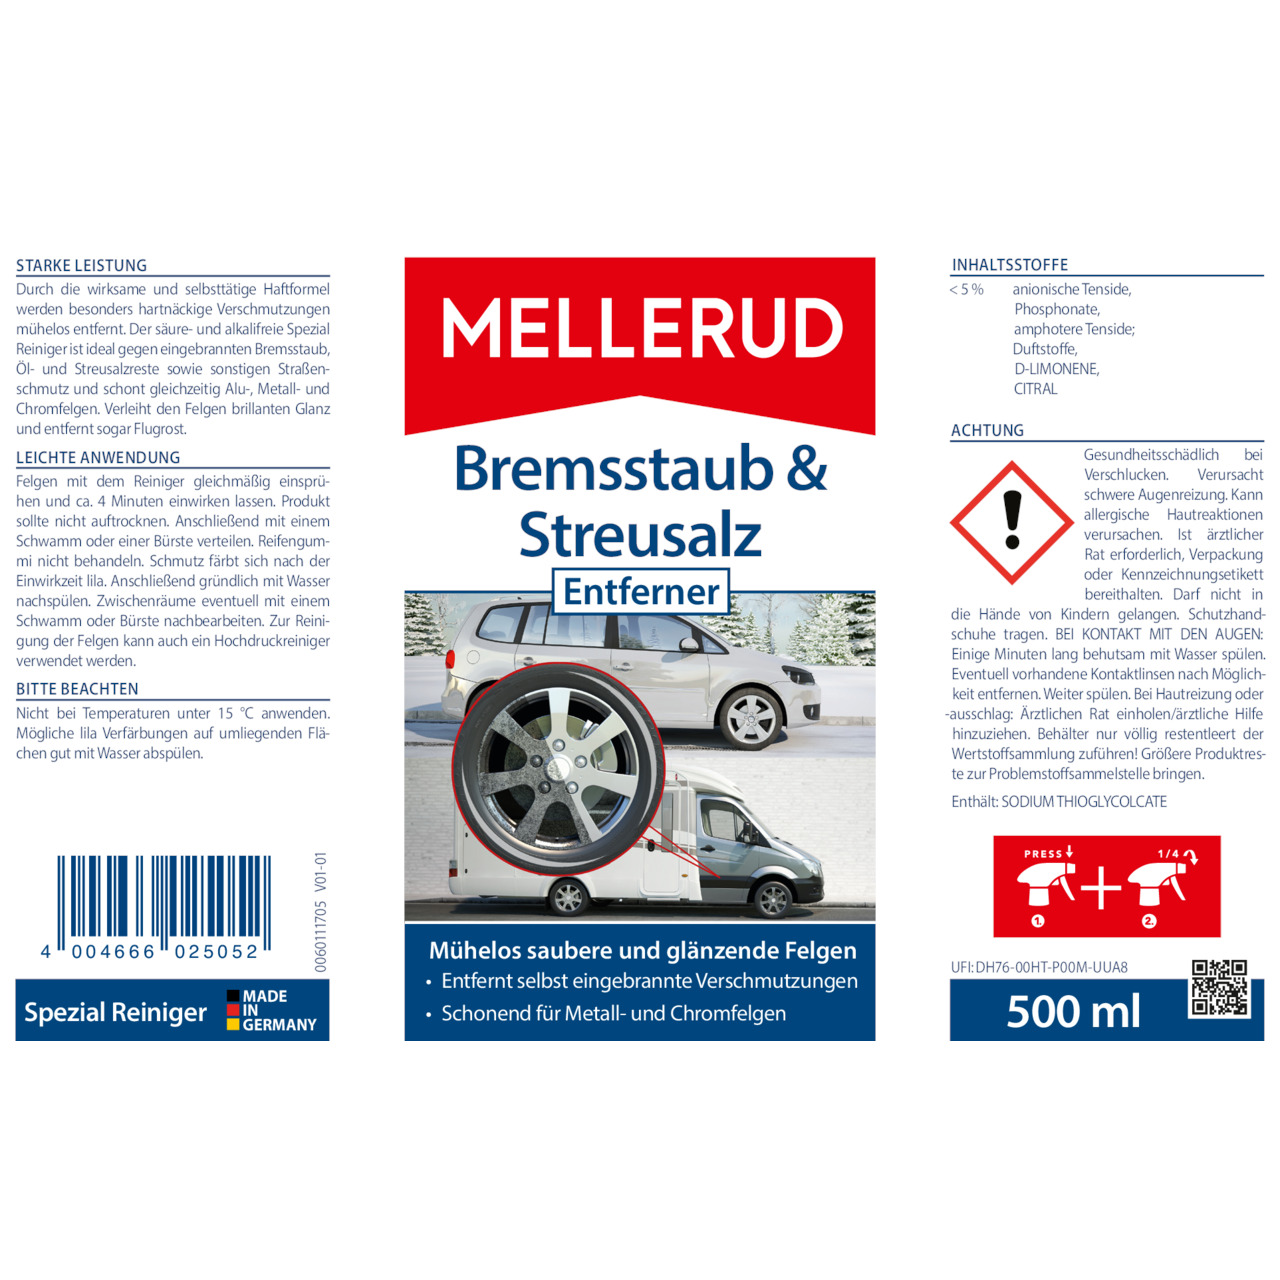 Bremsstaub & Streusalz Entferner 0,5 l